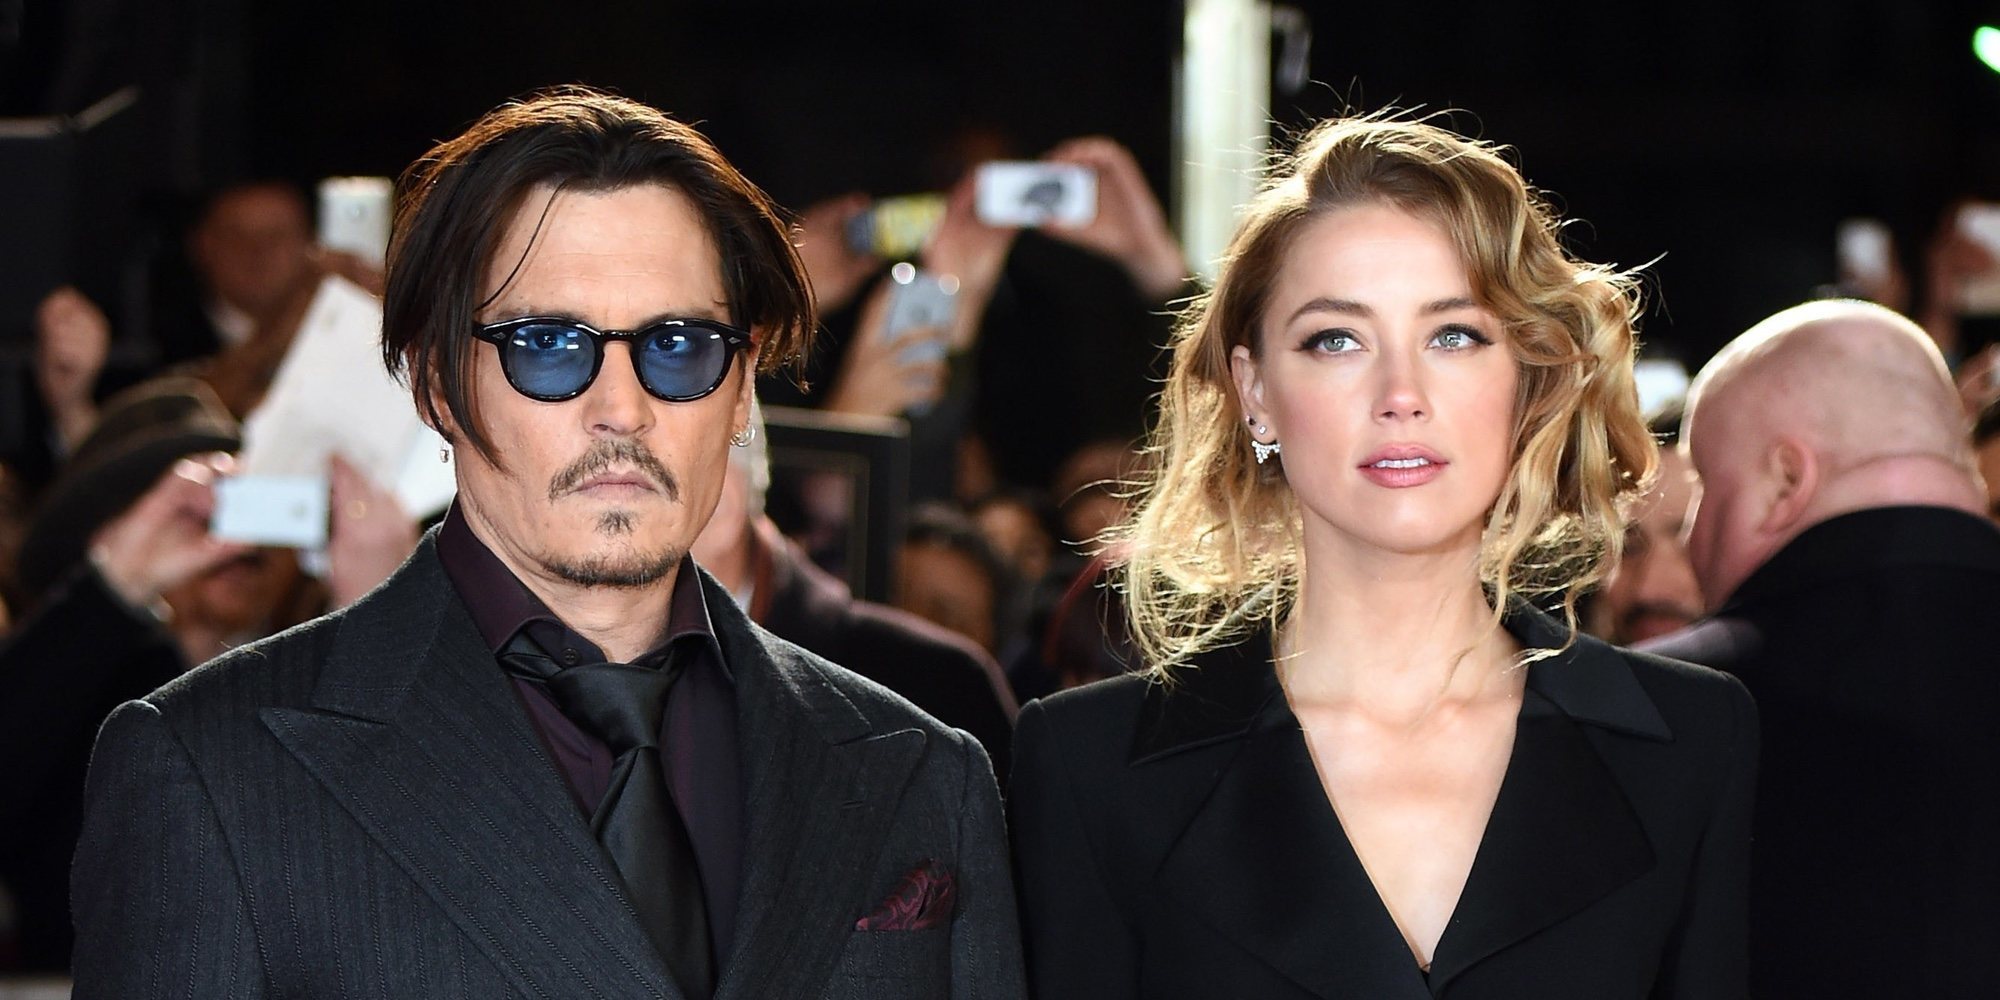 Amber Heard responde a las declaraciones de Johnny Depp: "Eran falsas"